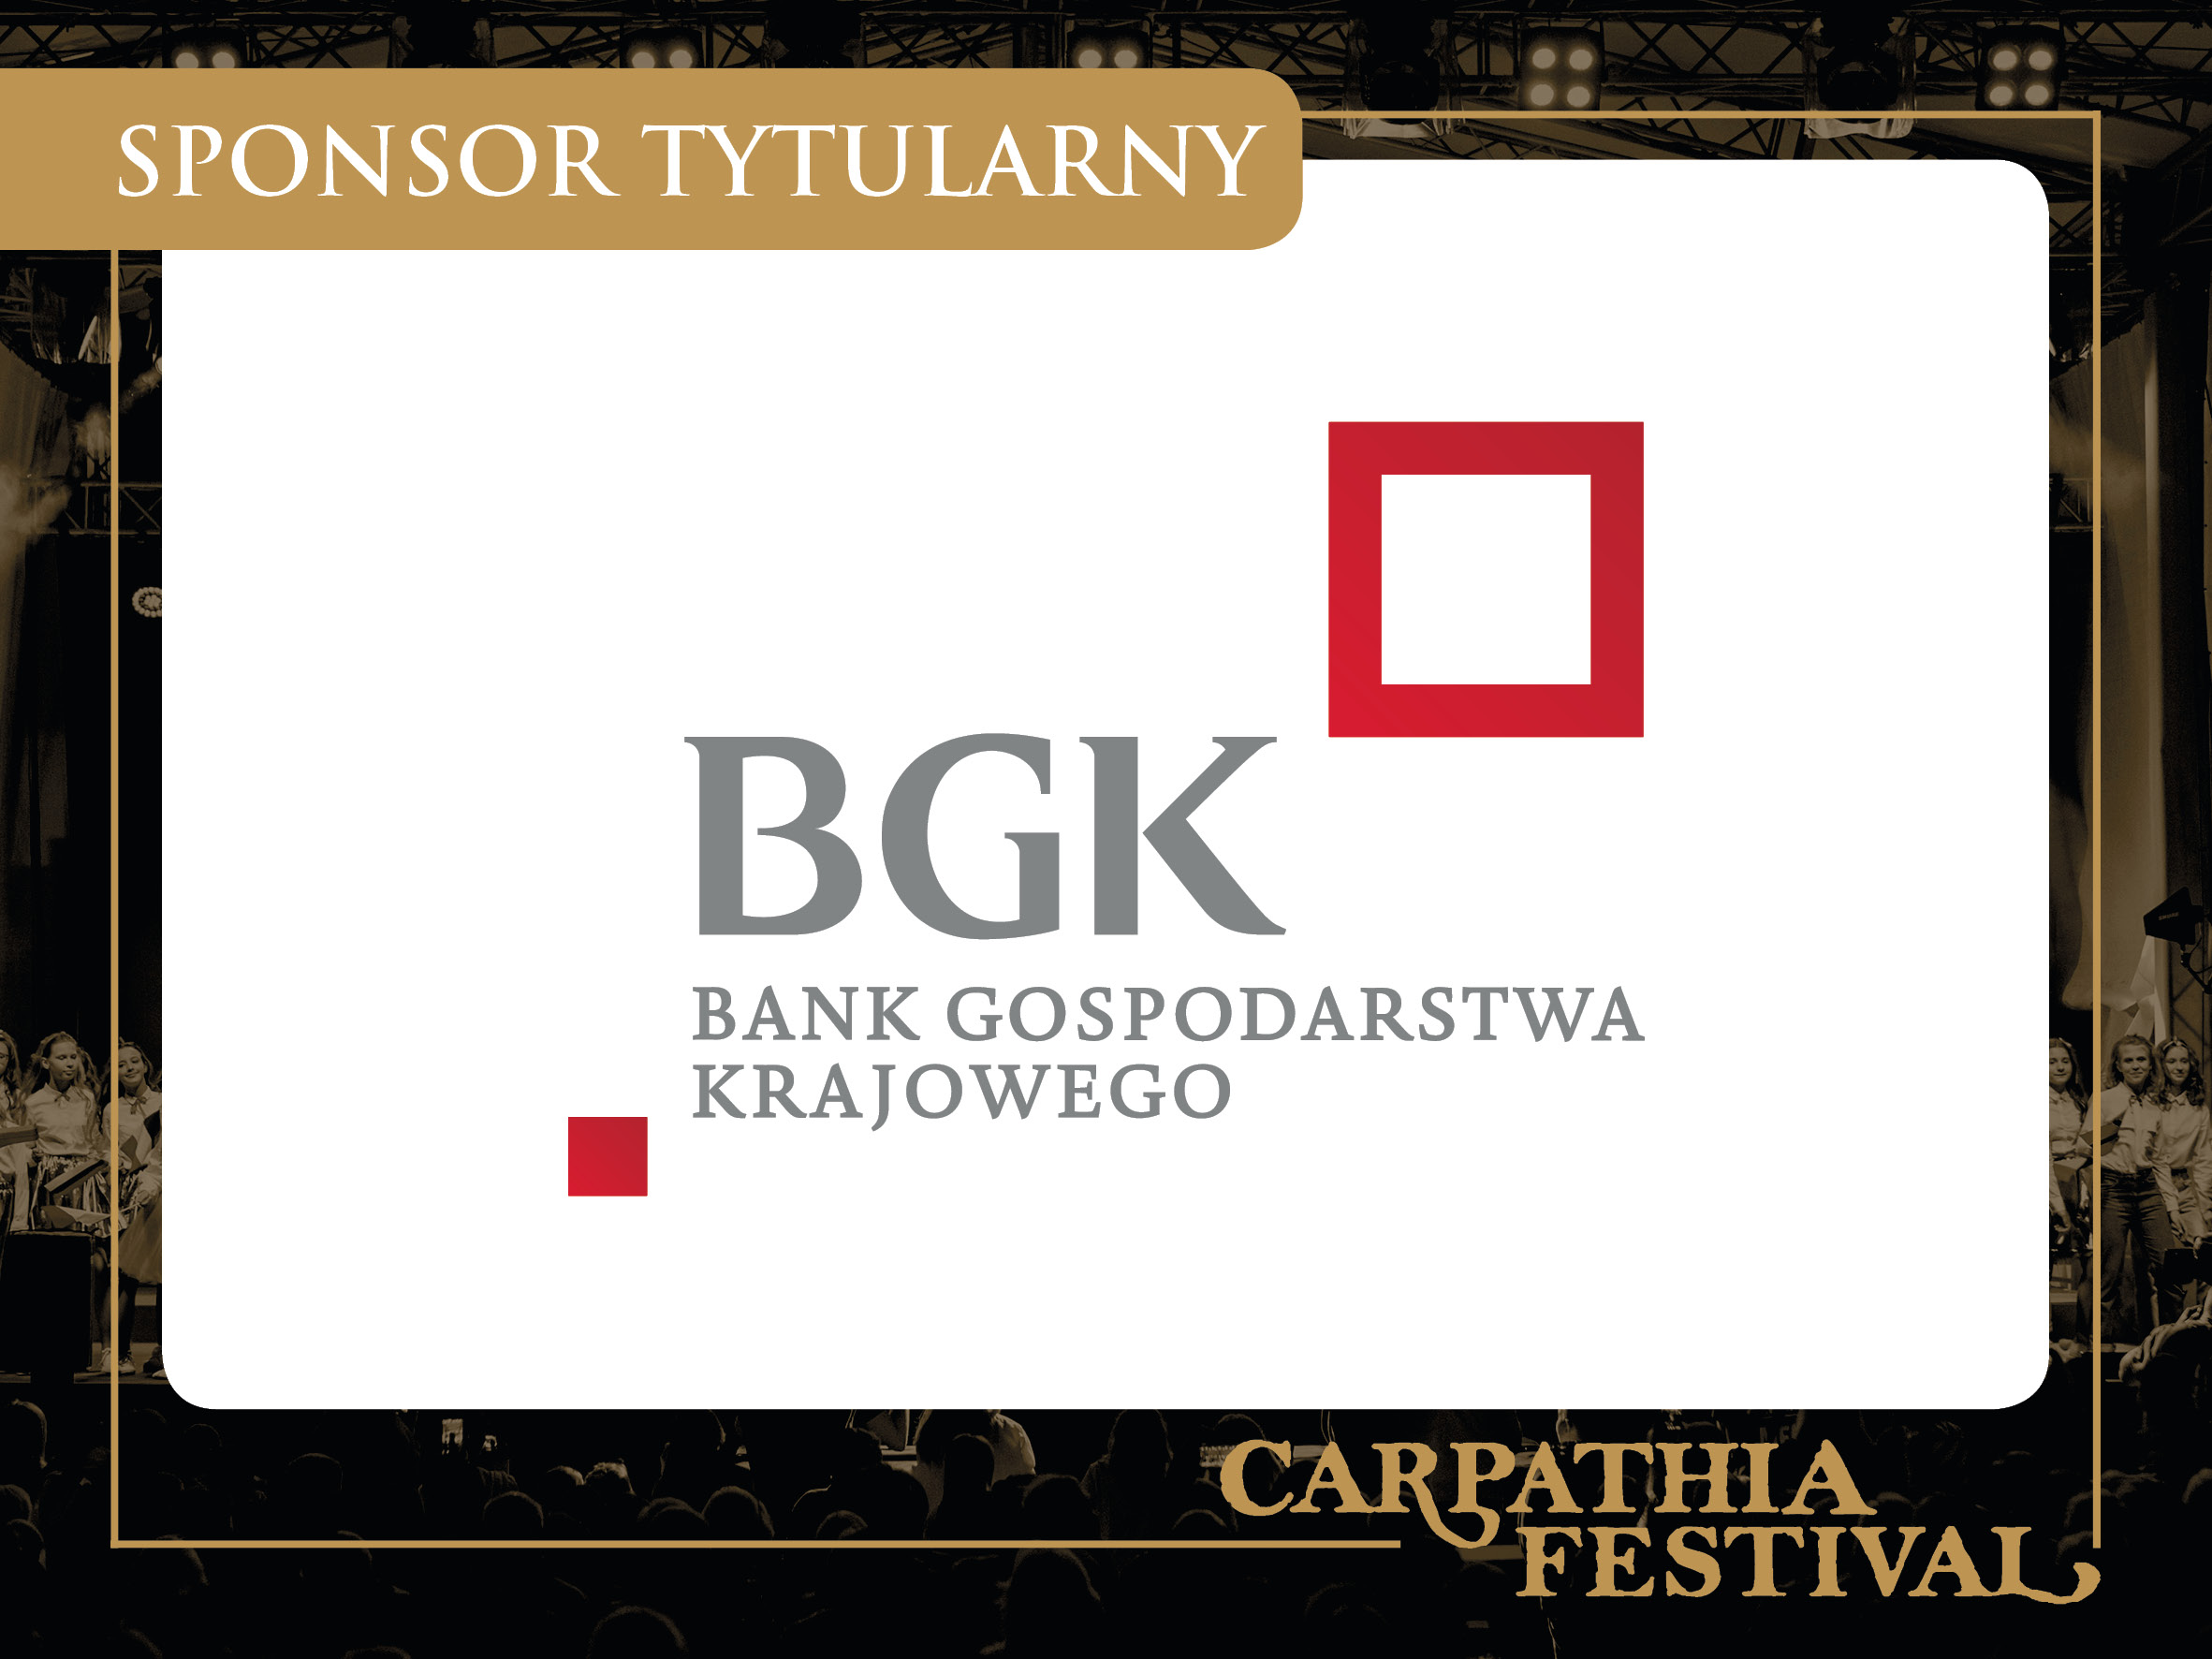 Bank Gospodarstwa Krajowego - Sponsorem Tytularnym „Carpathia Festival”!